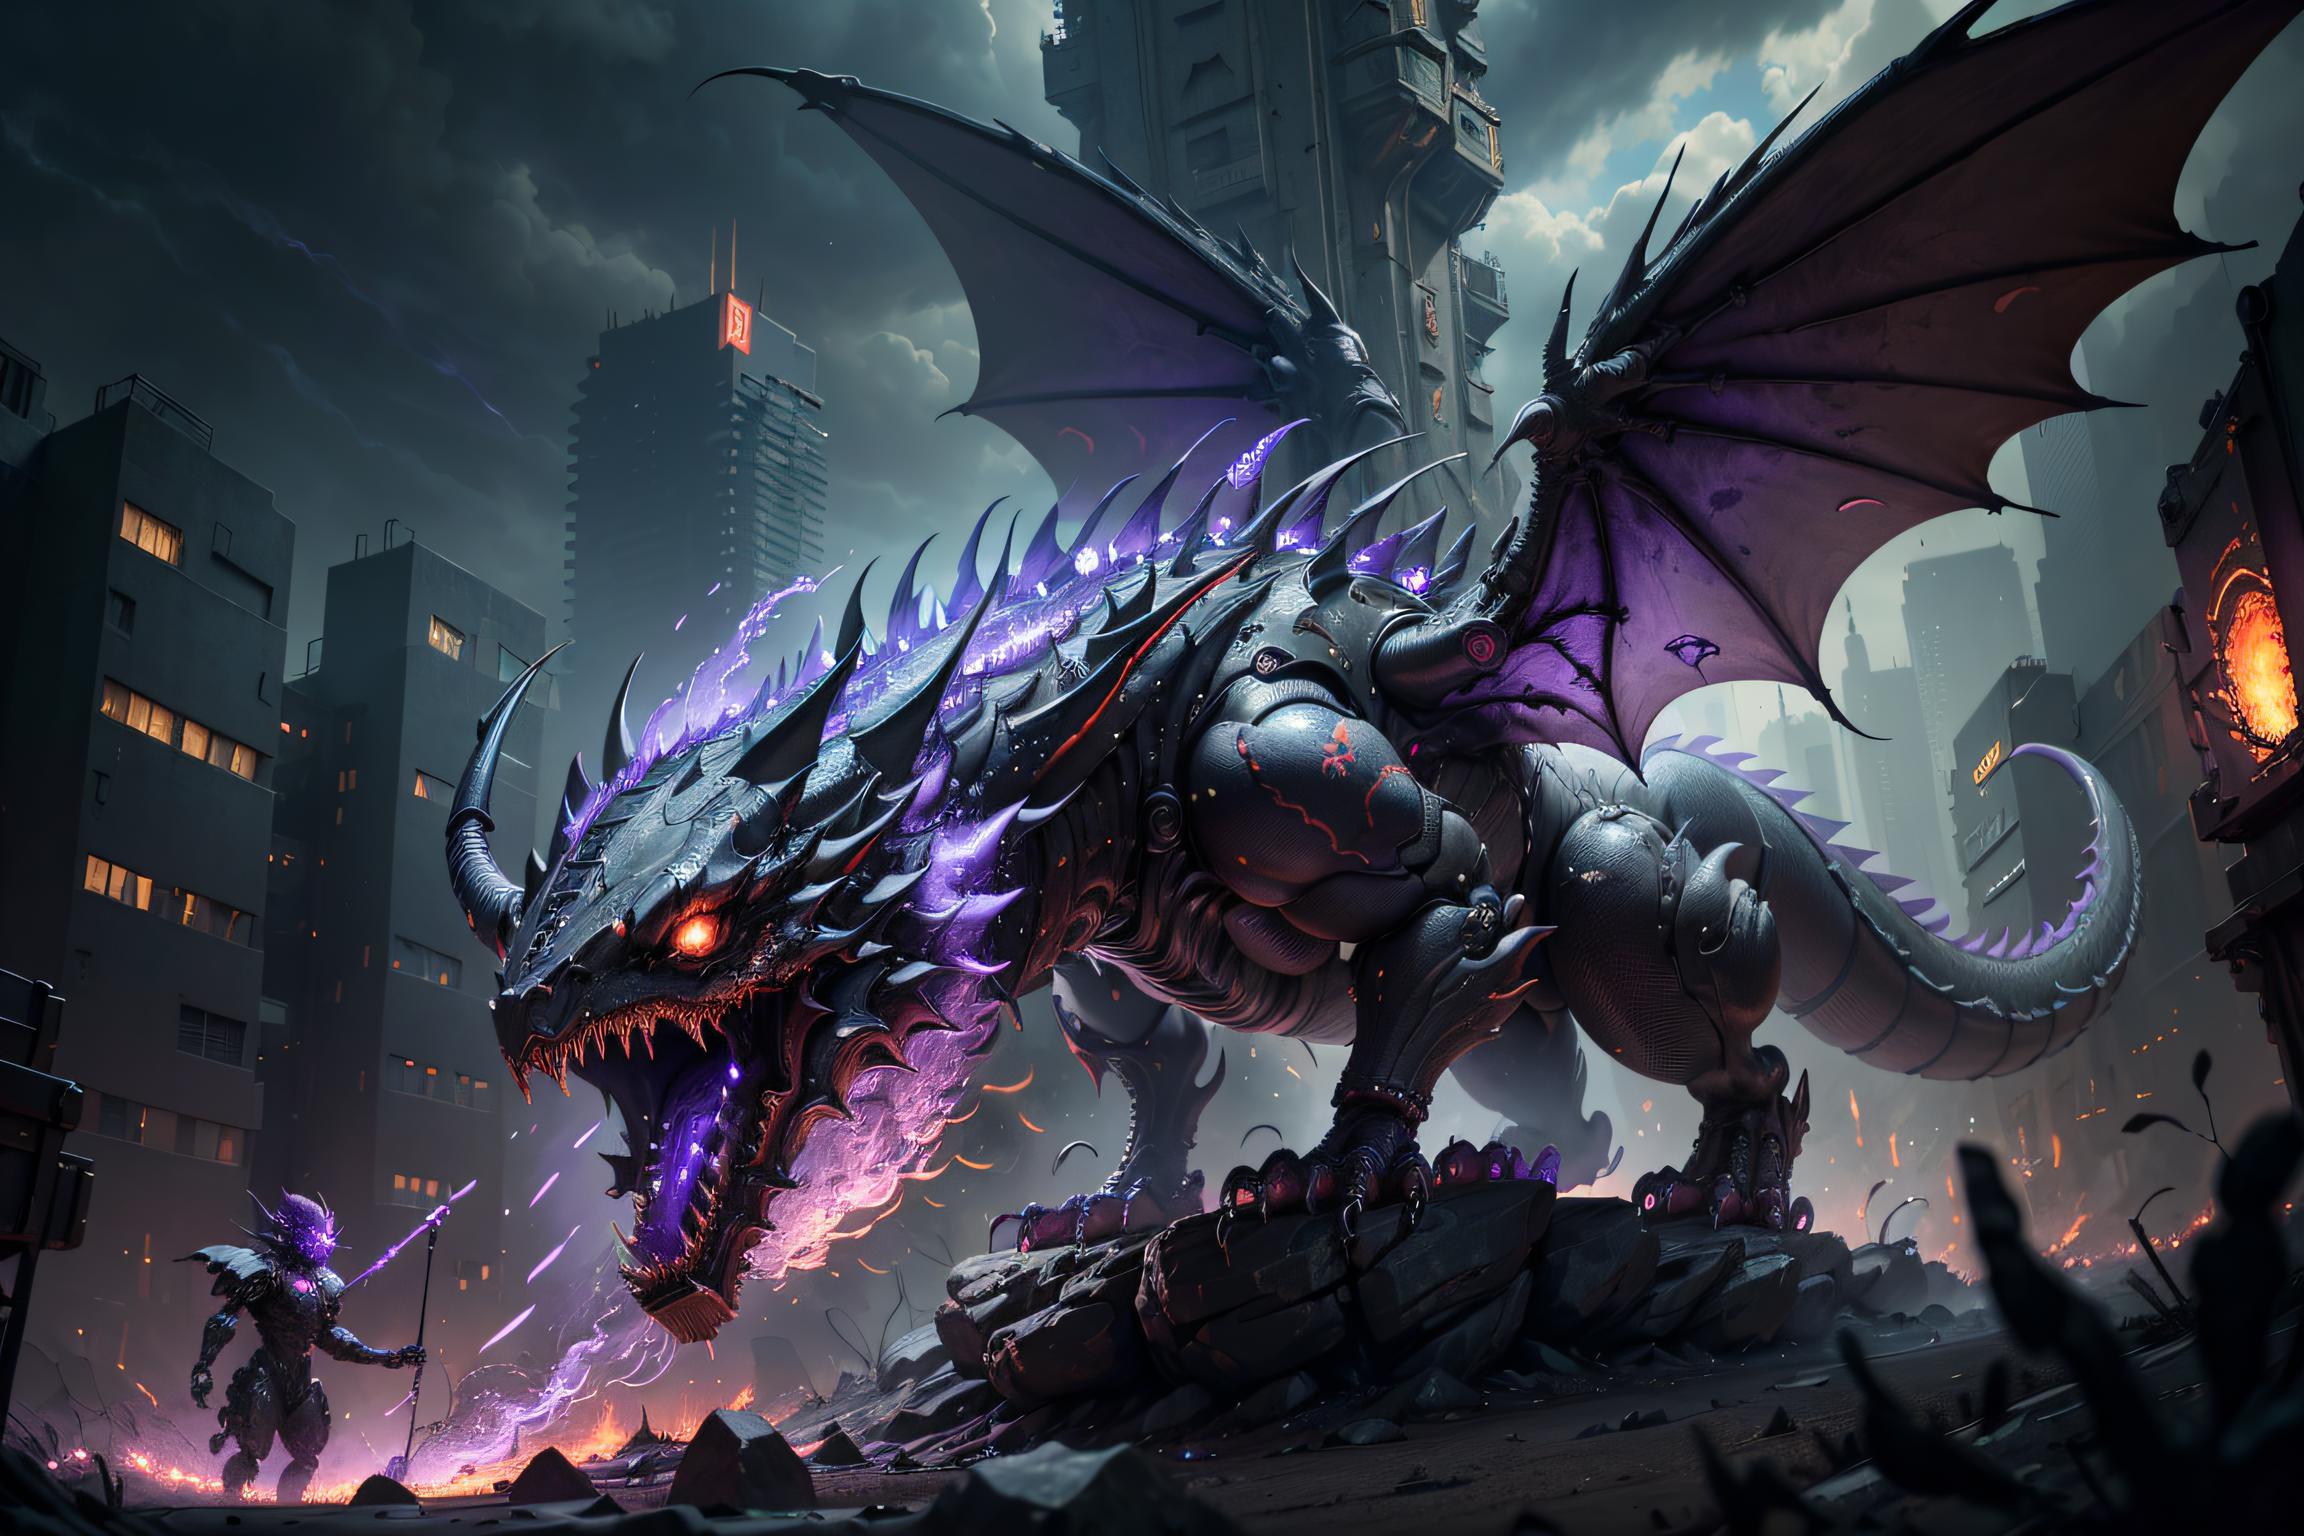 IronCatLoRA #2 - Dragons image by Cathexis